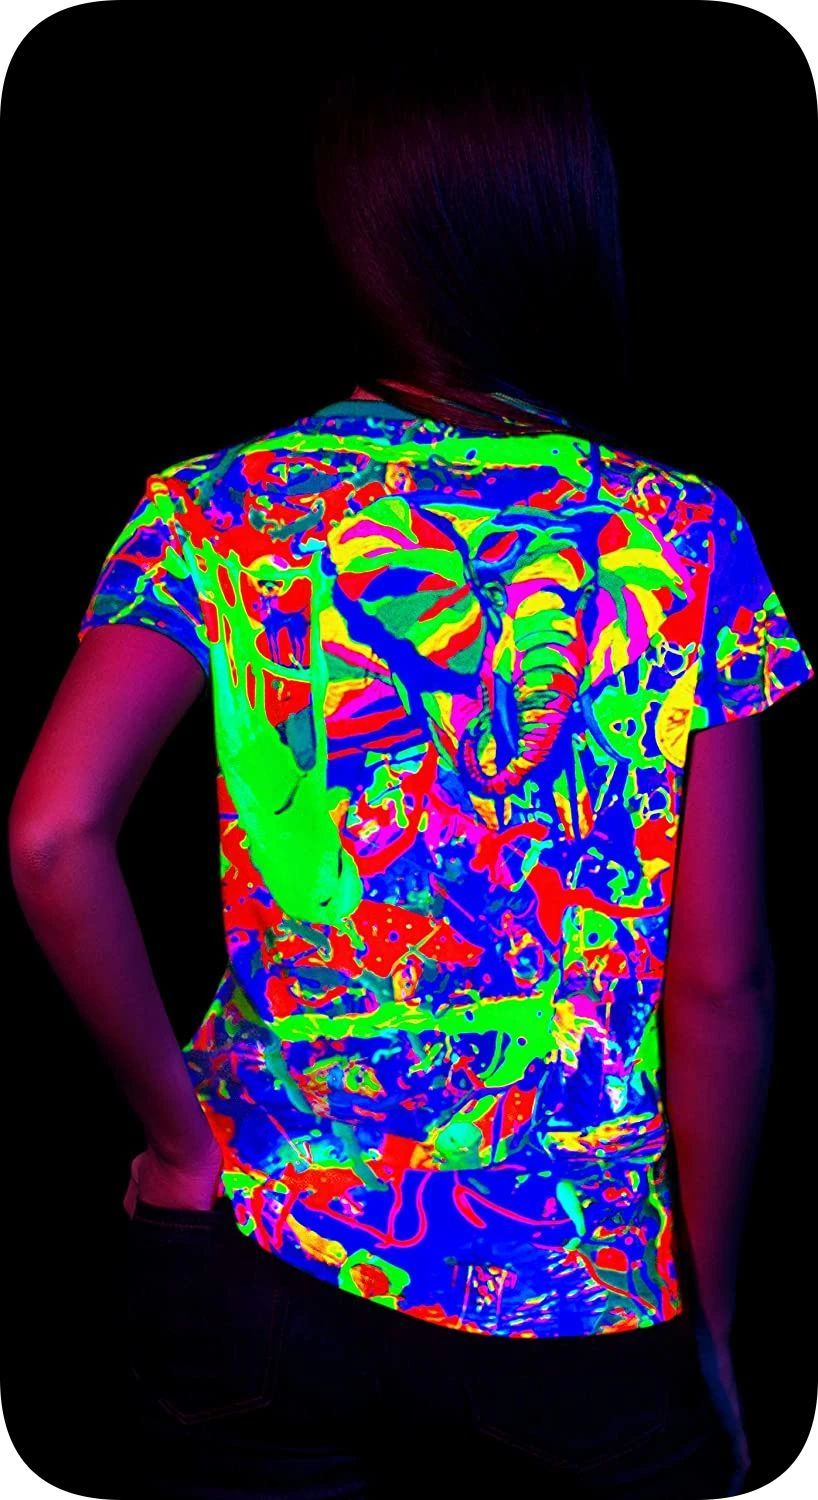 Neon Graphic Tees Womens in UV Fluorescent Elegant Elephant tsw5